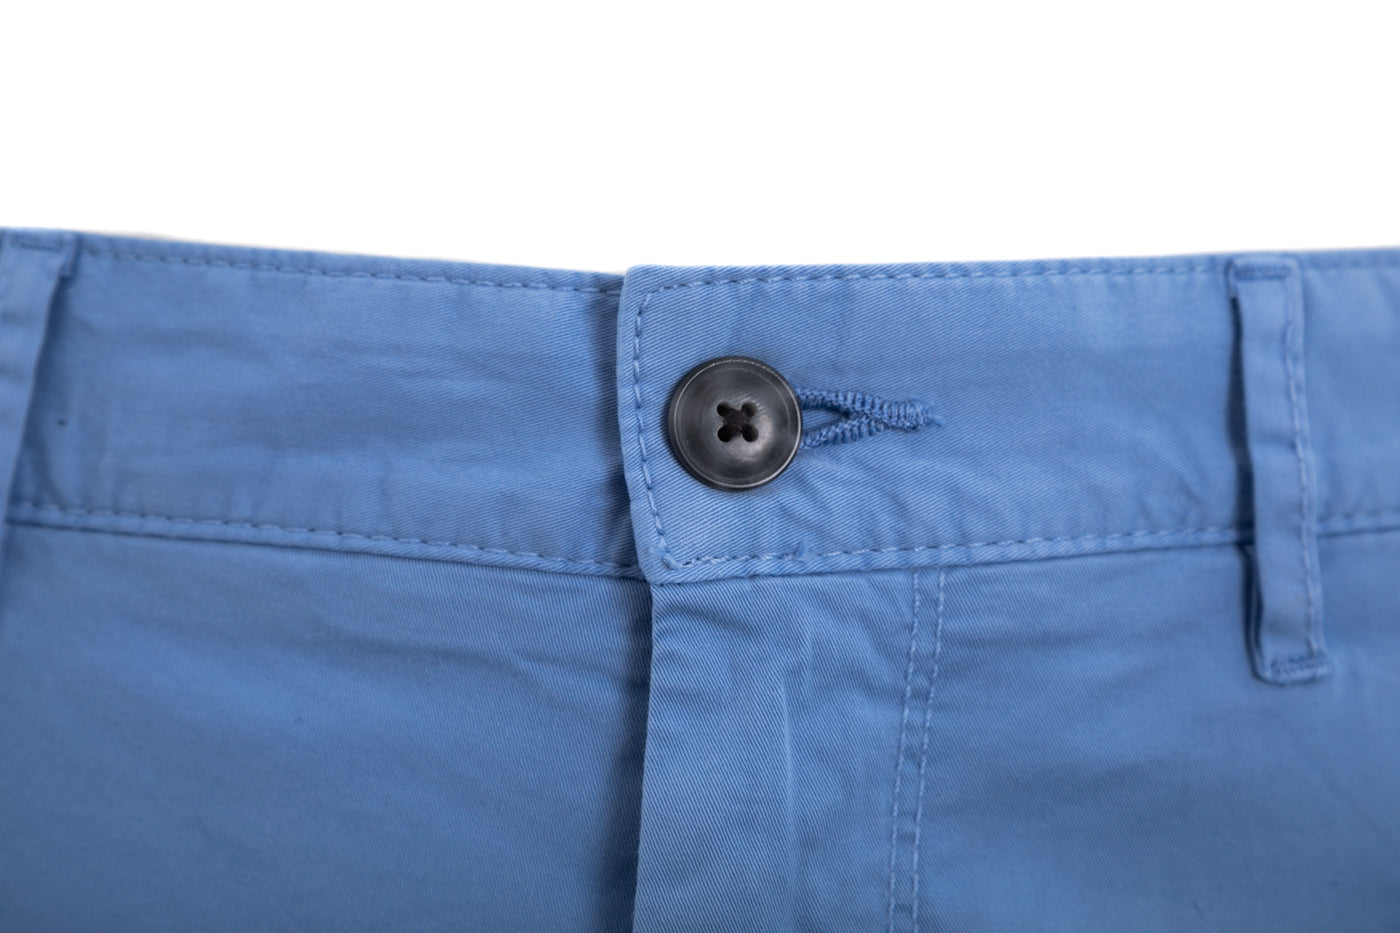 BOSS Schino-Slim-Shorts 2 Short in Open Blue